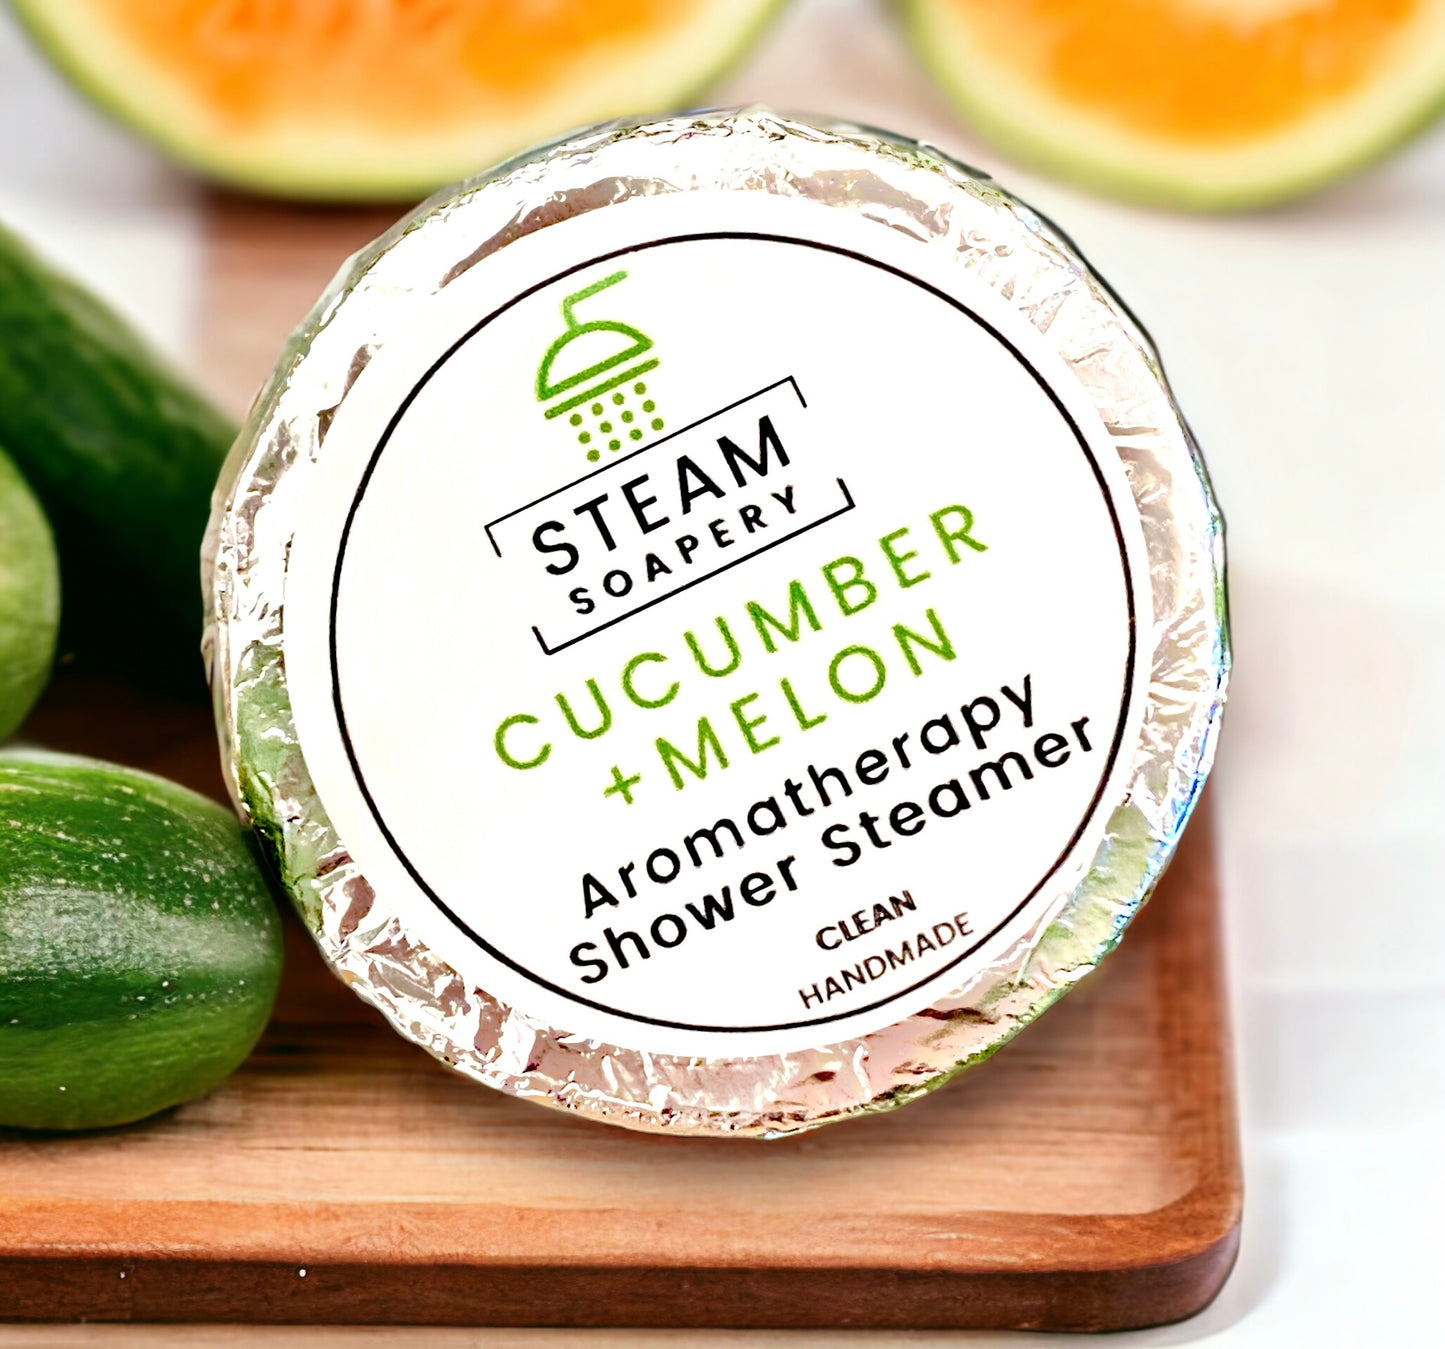 Cucumber + Melon Shower Steamer